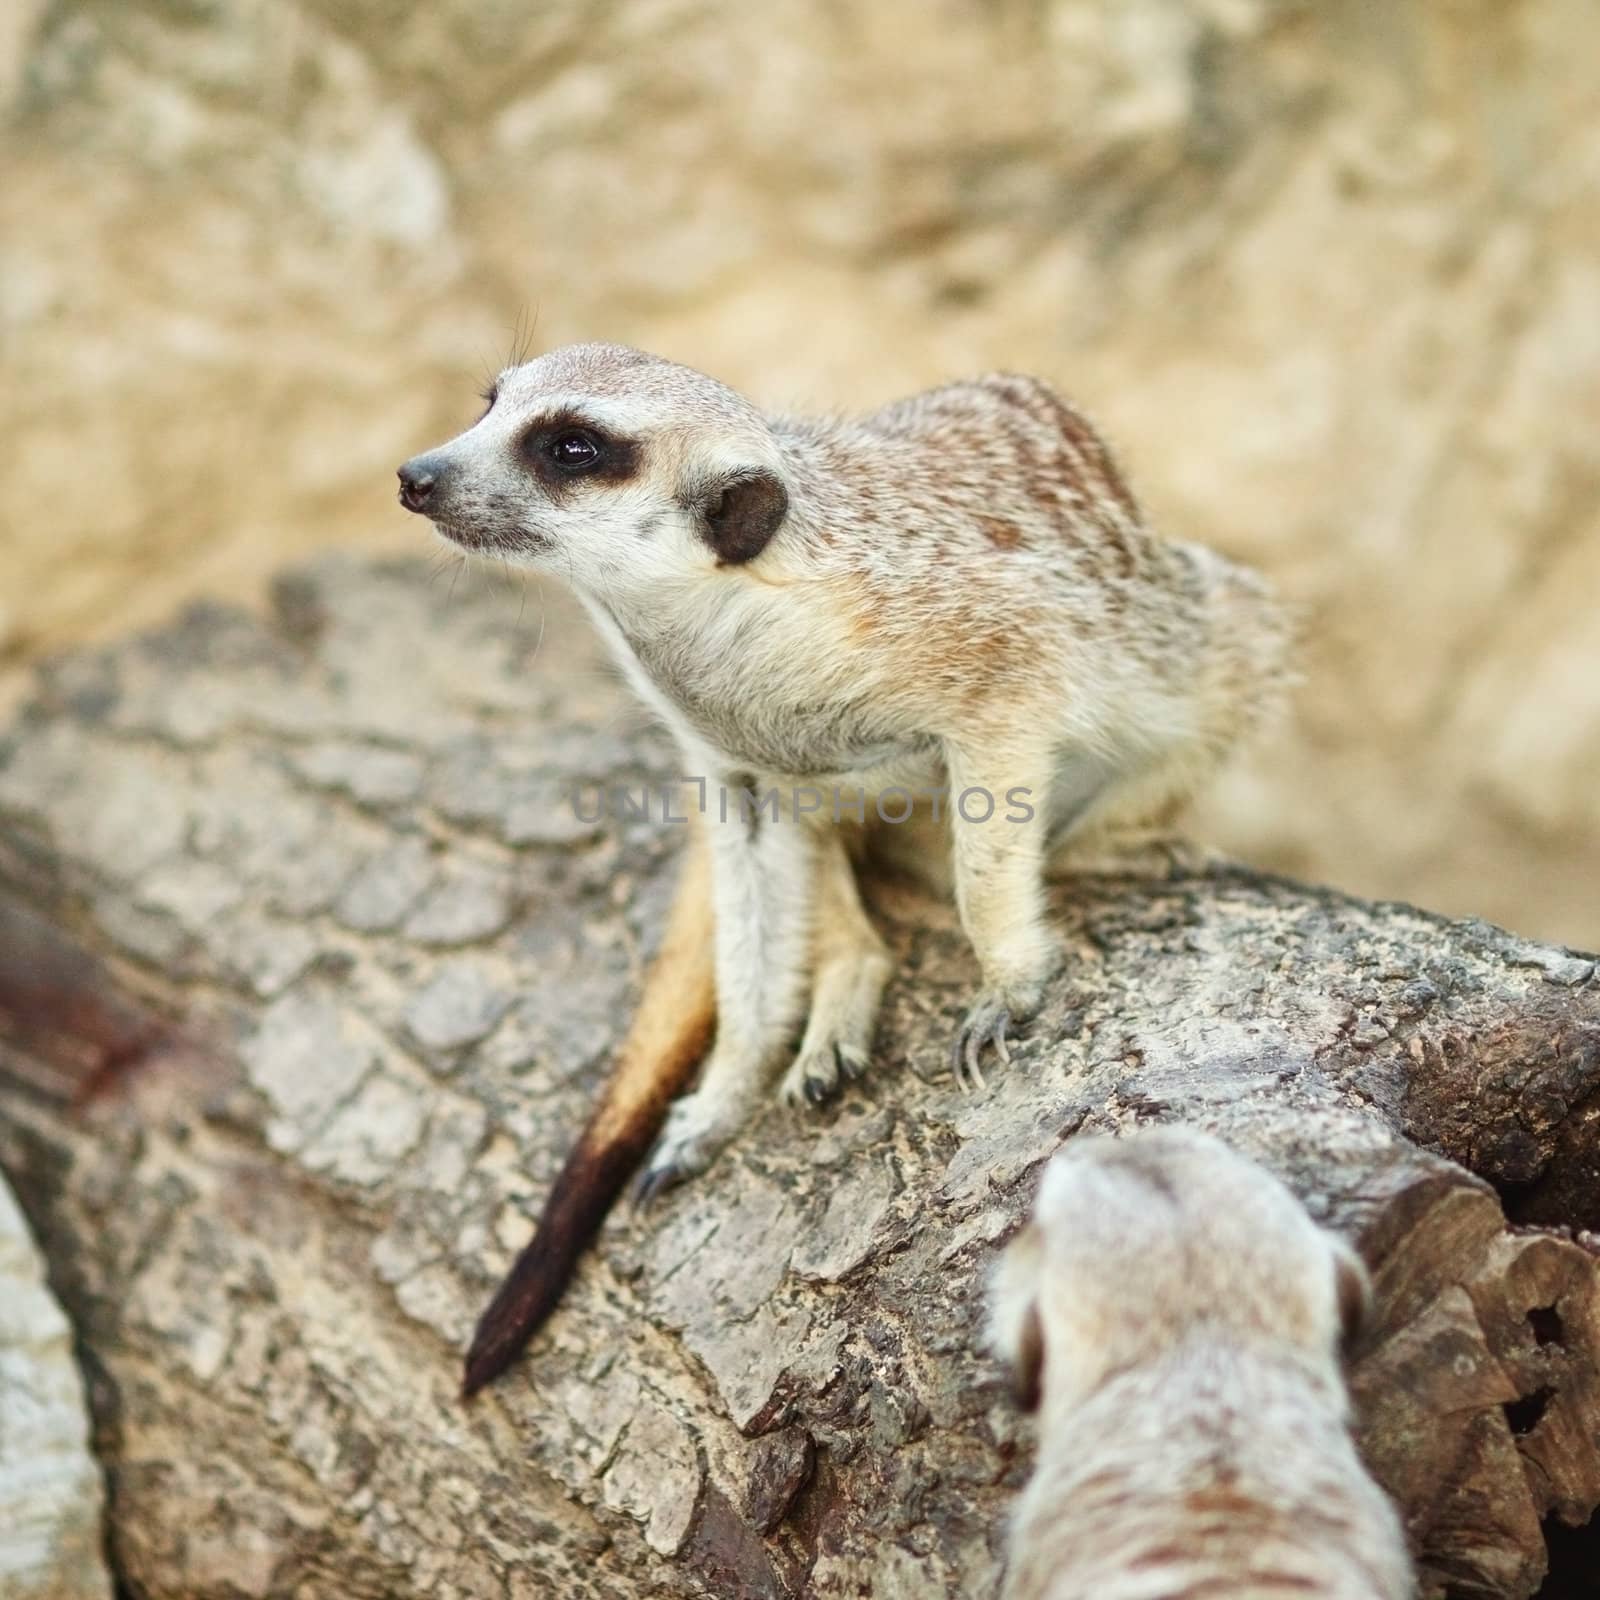 meerkat standing on old wood and looking